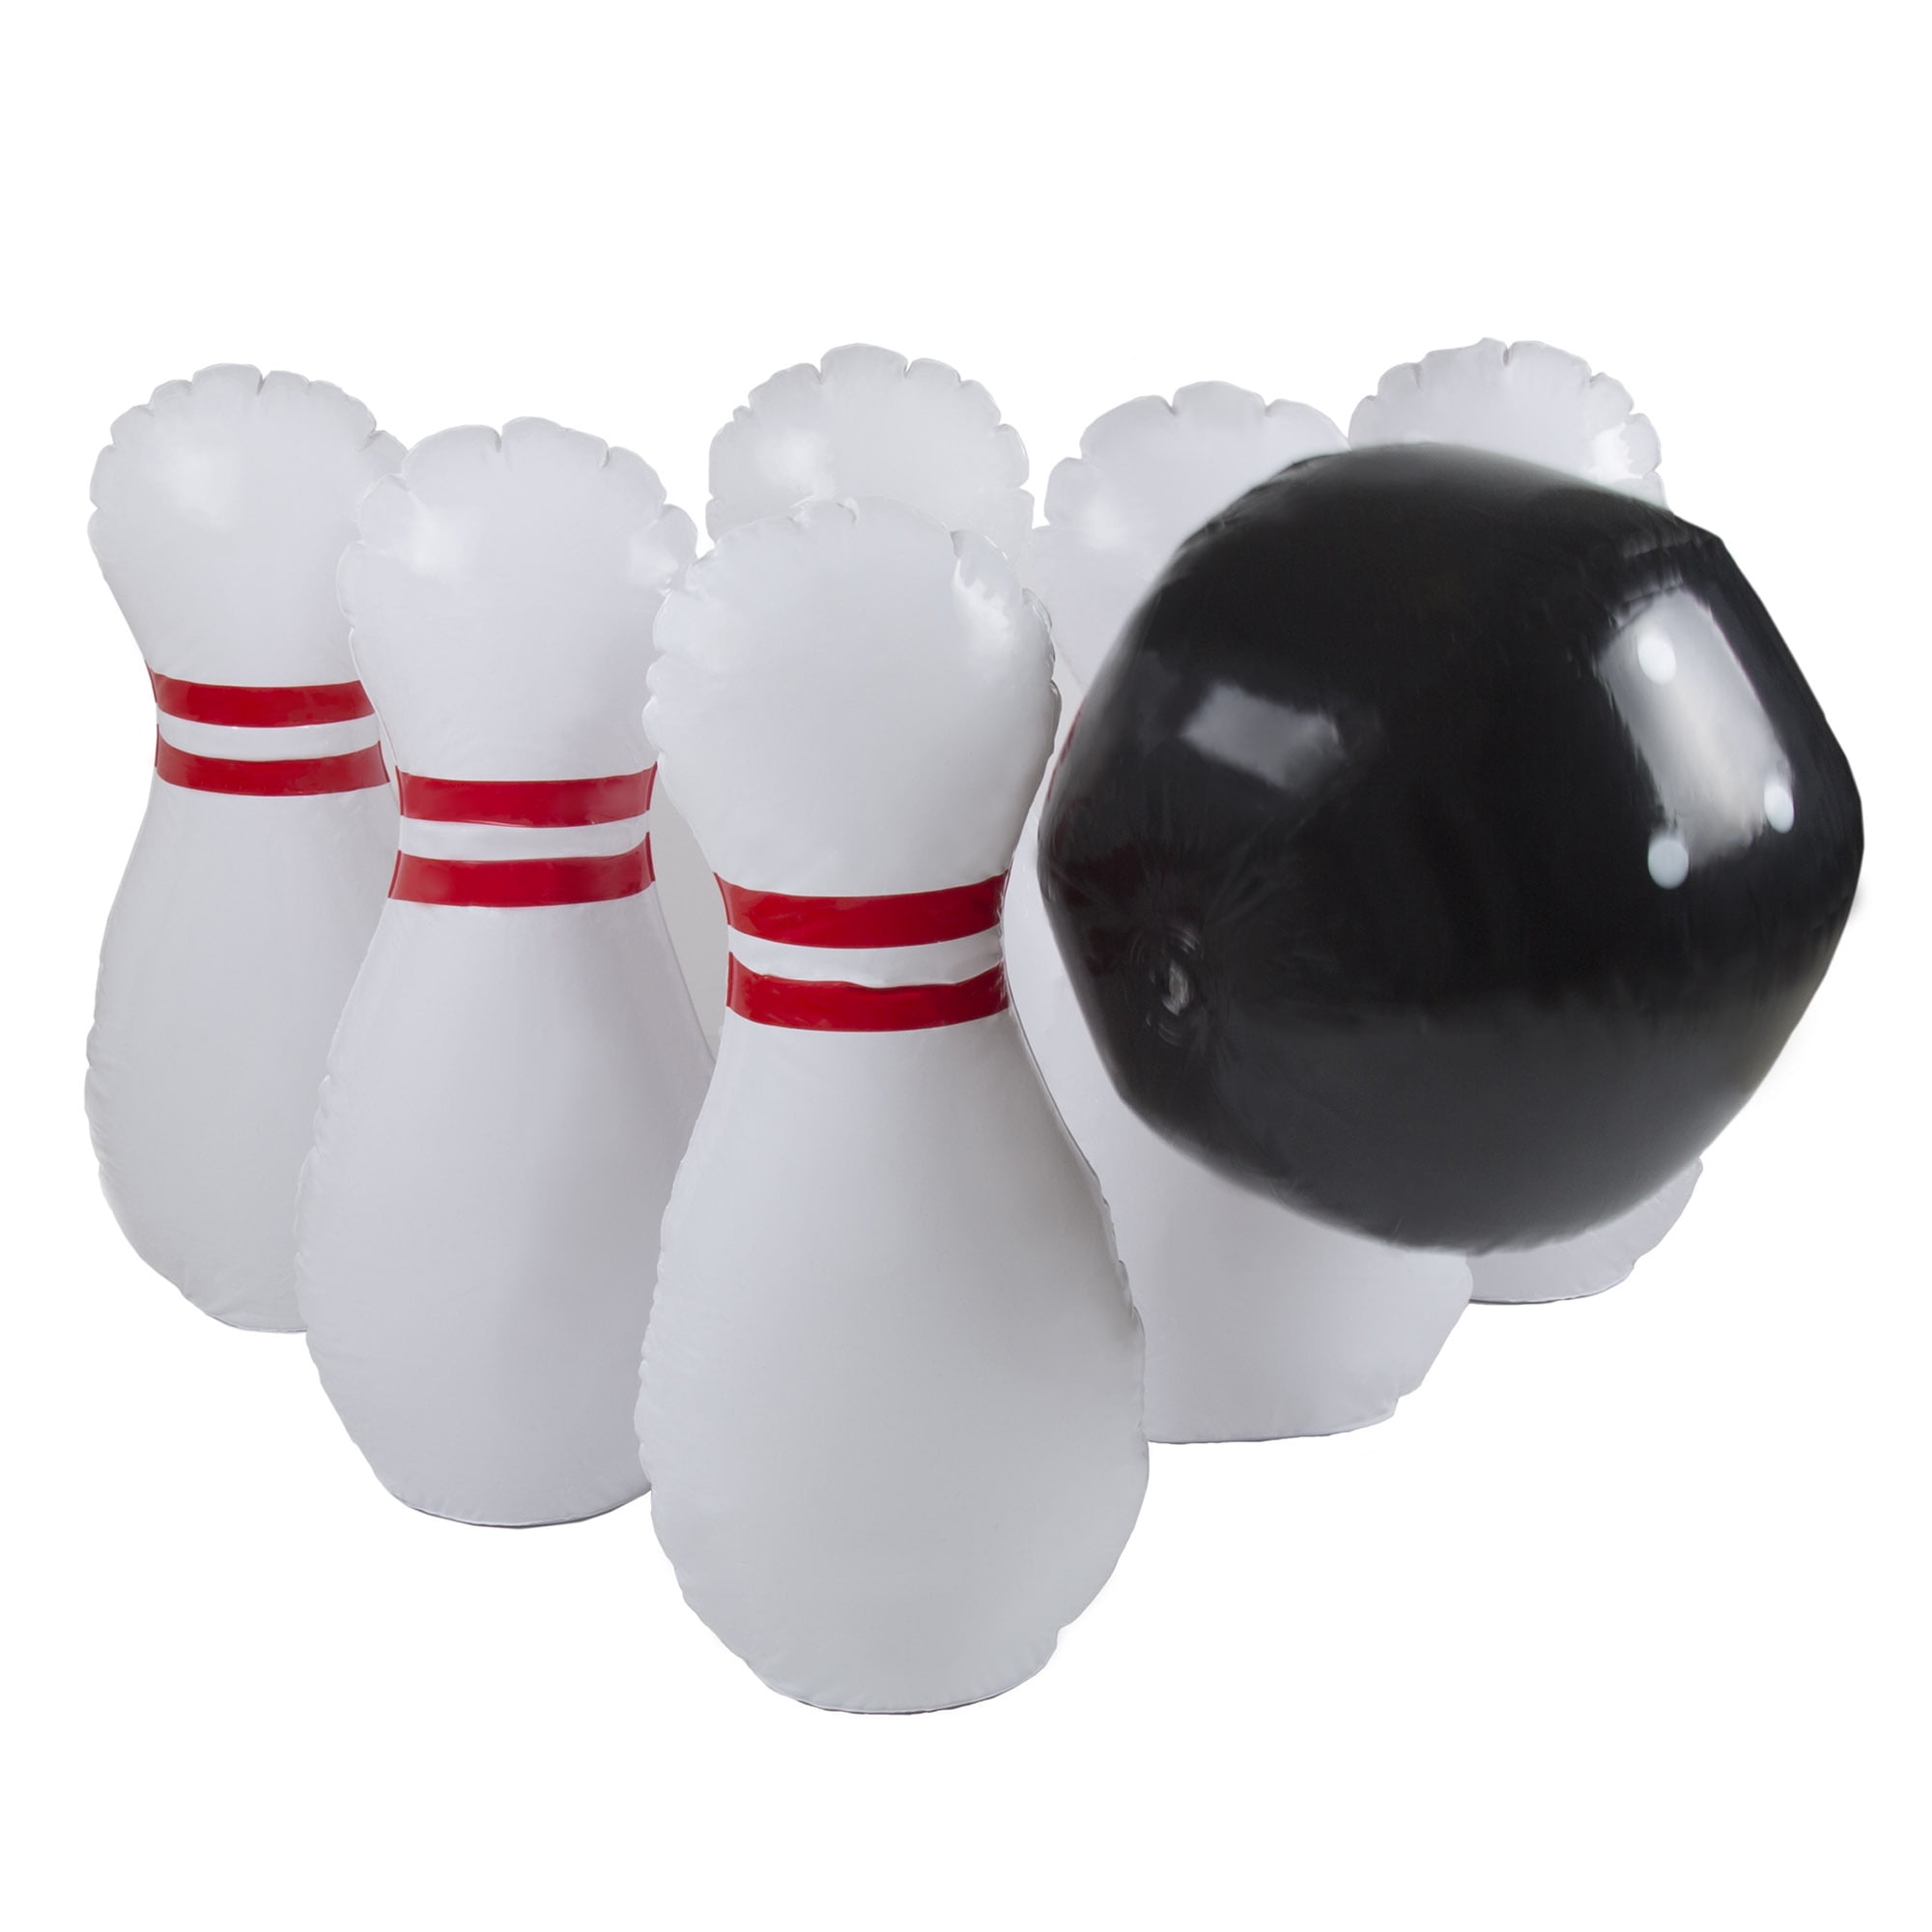 walmart jumbo bowling set